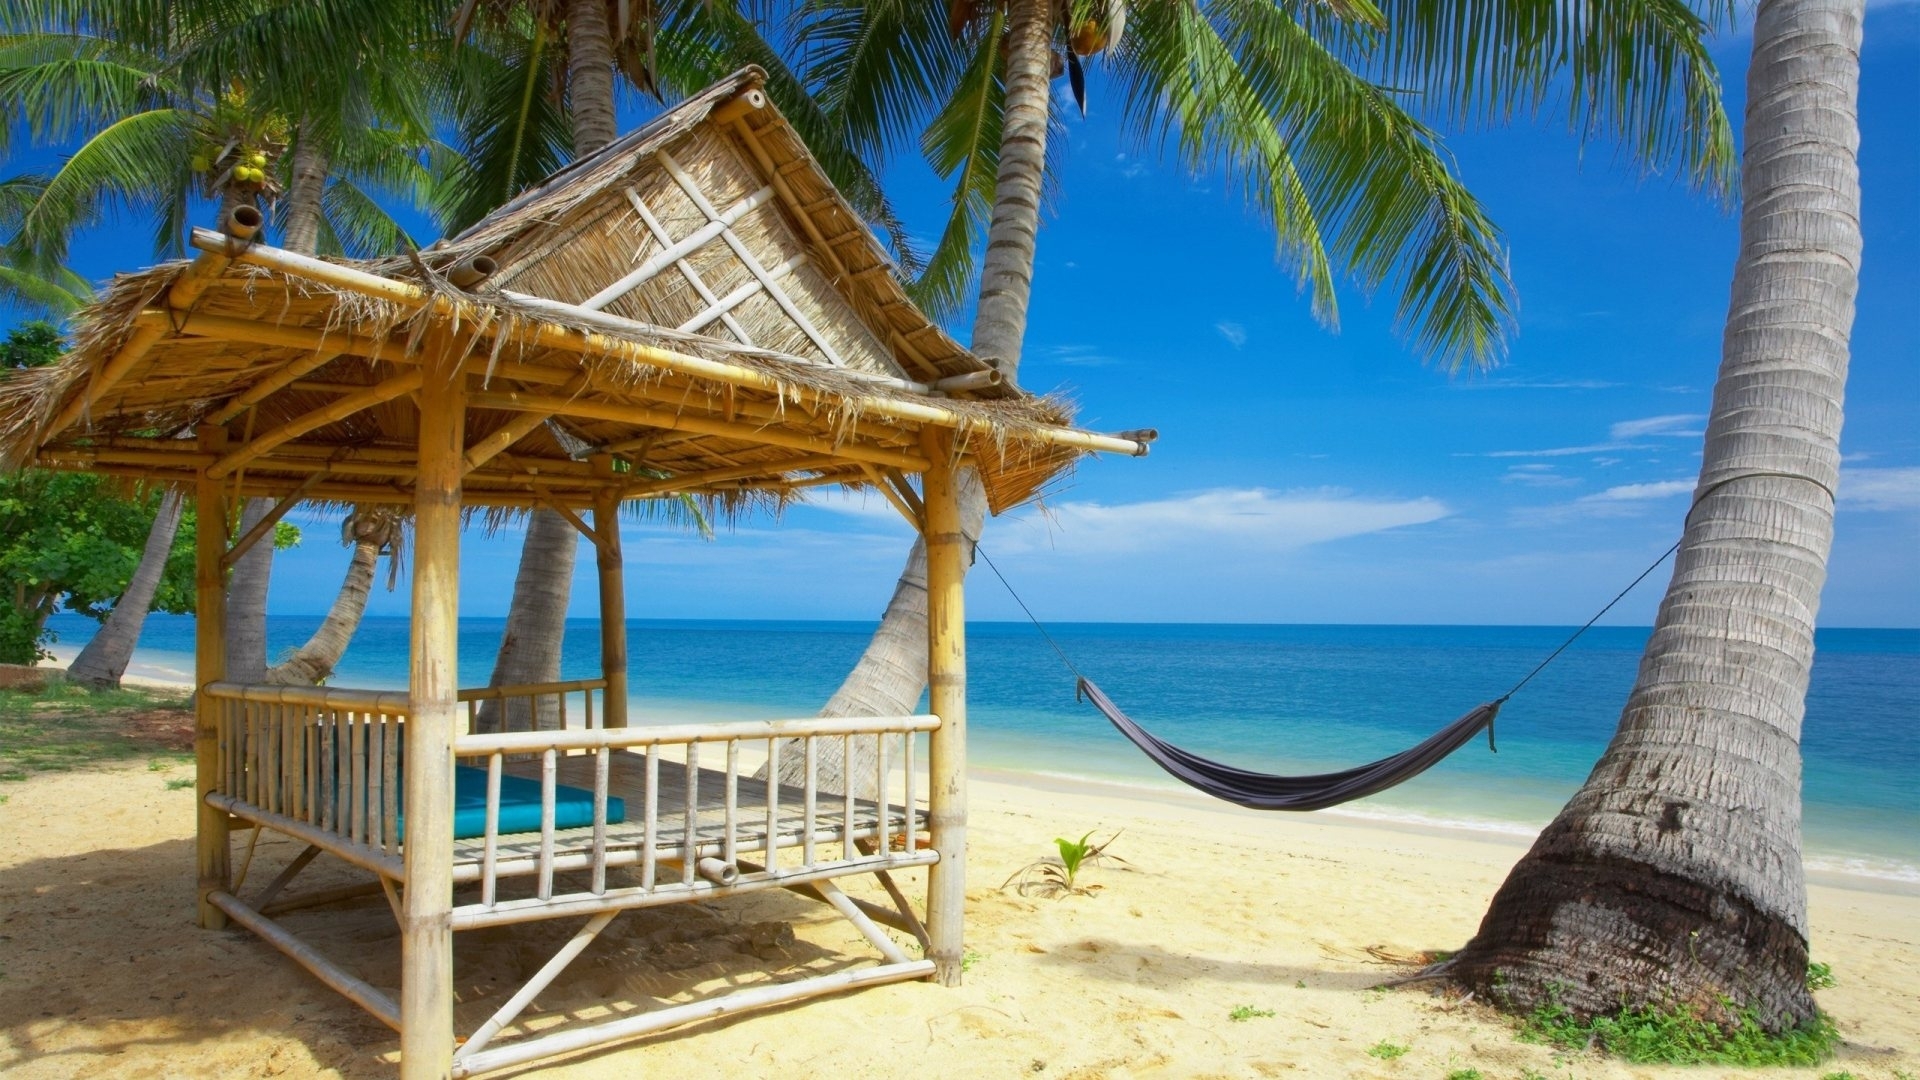 Seychelles Beach Huts HD Wallpaper Background Image